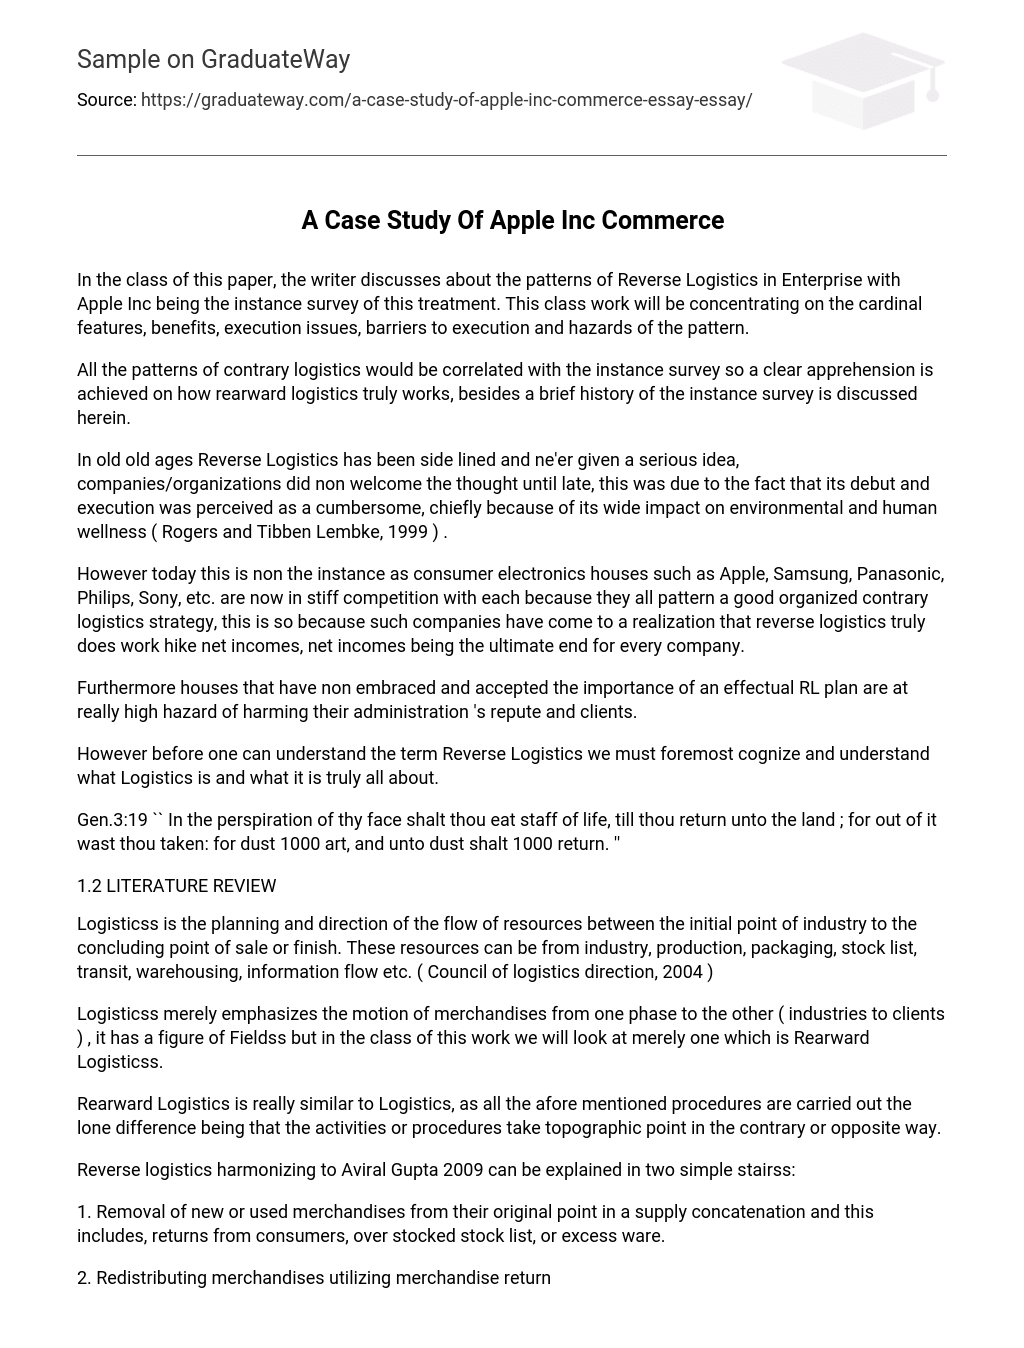 A Case Study Of Apple Inc Commerce